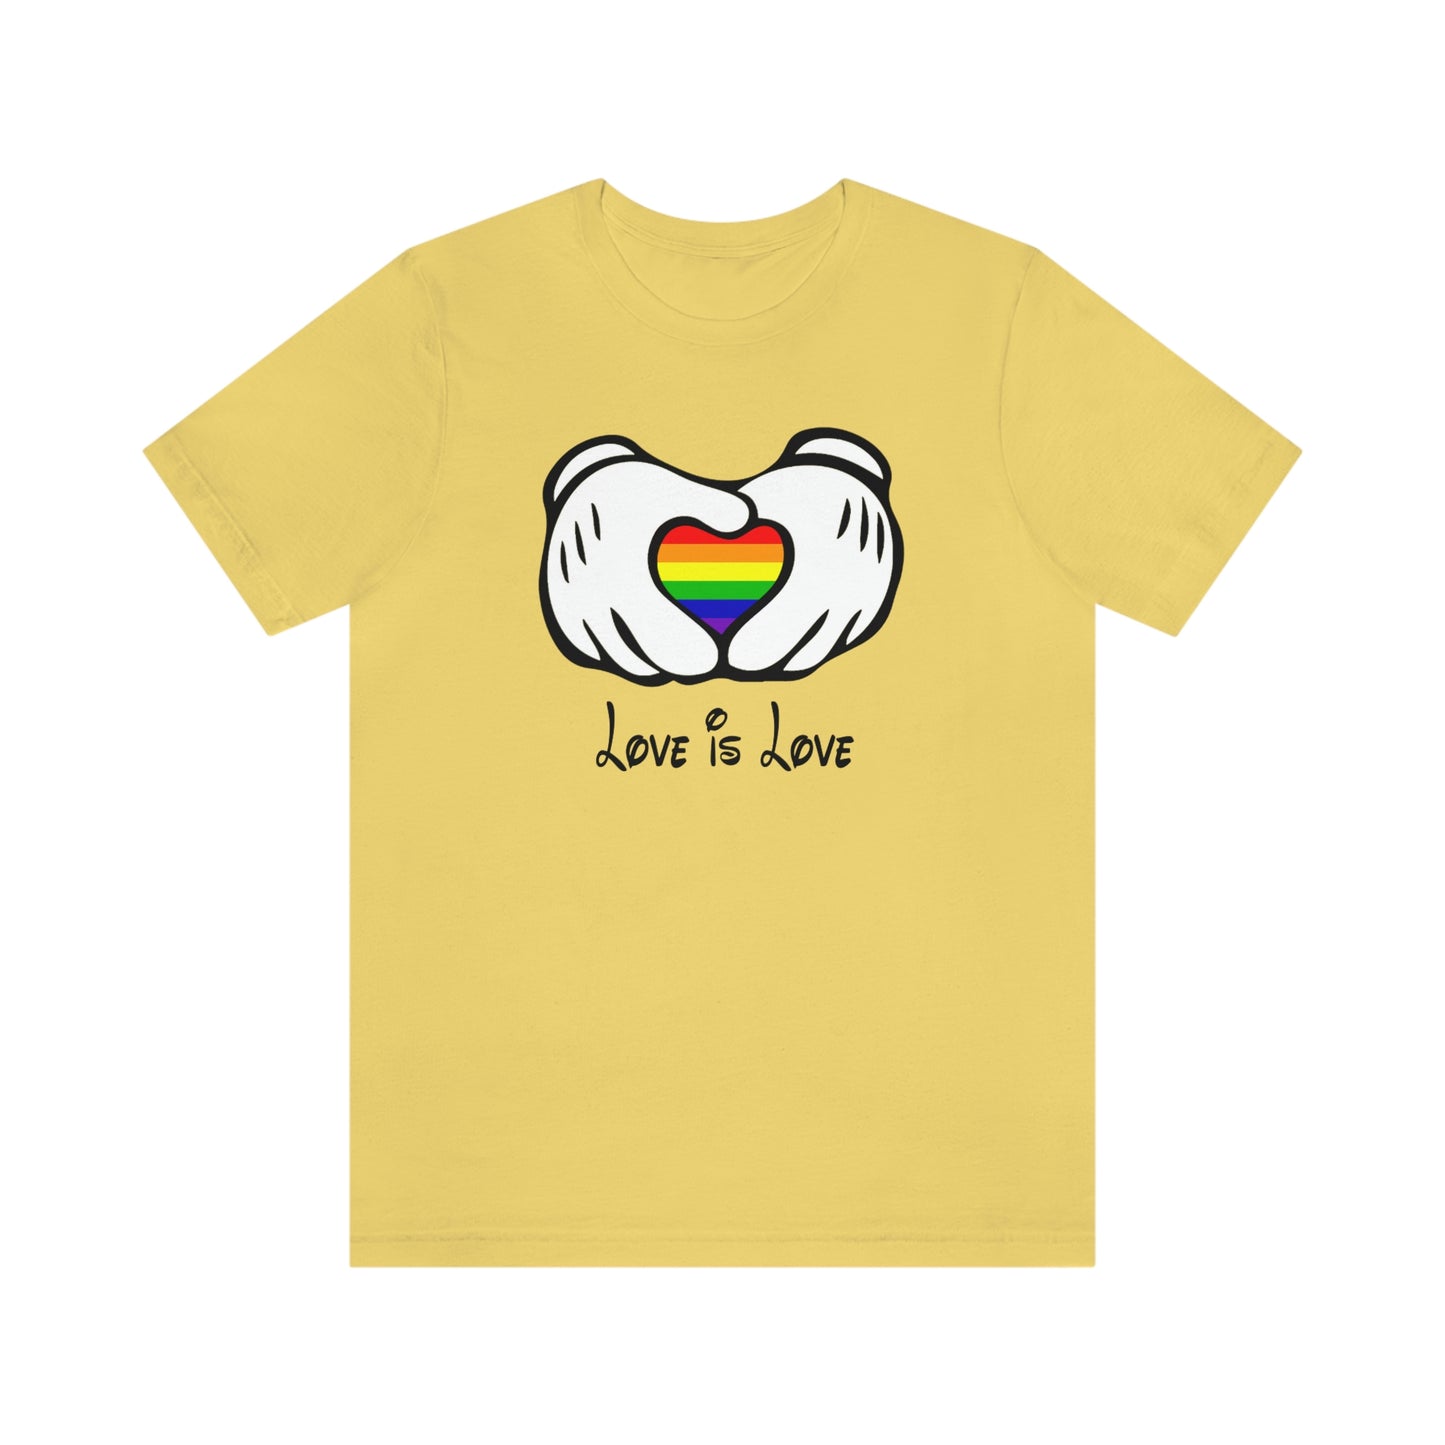 Love is Love Mouse Hands Adult Unisex T-Shirt